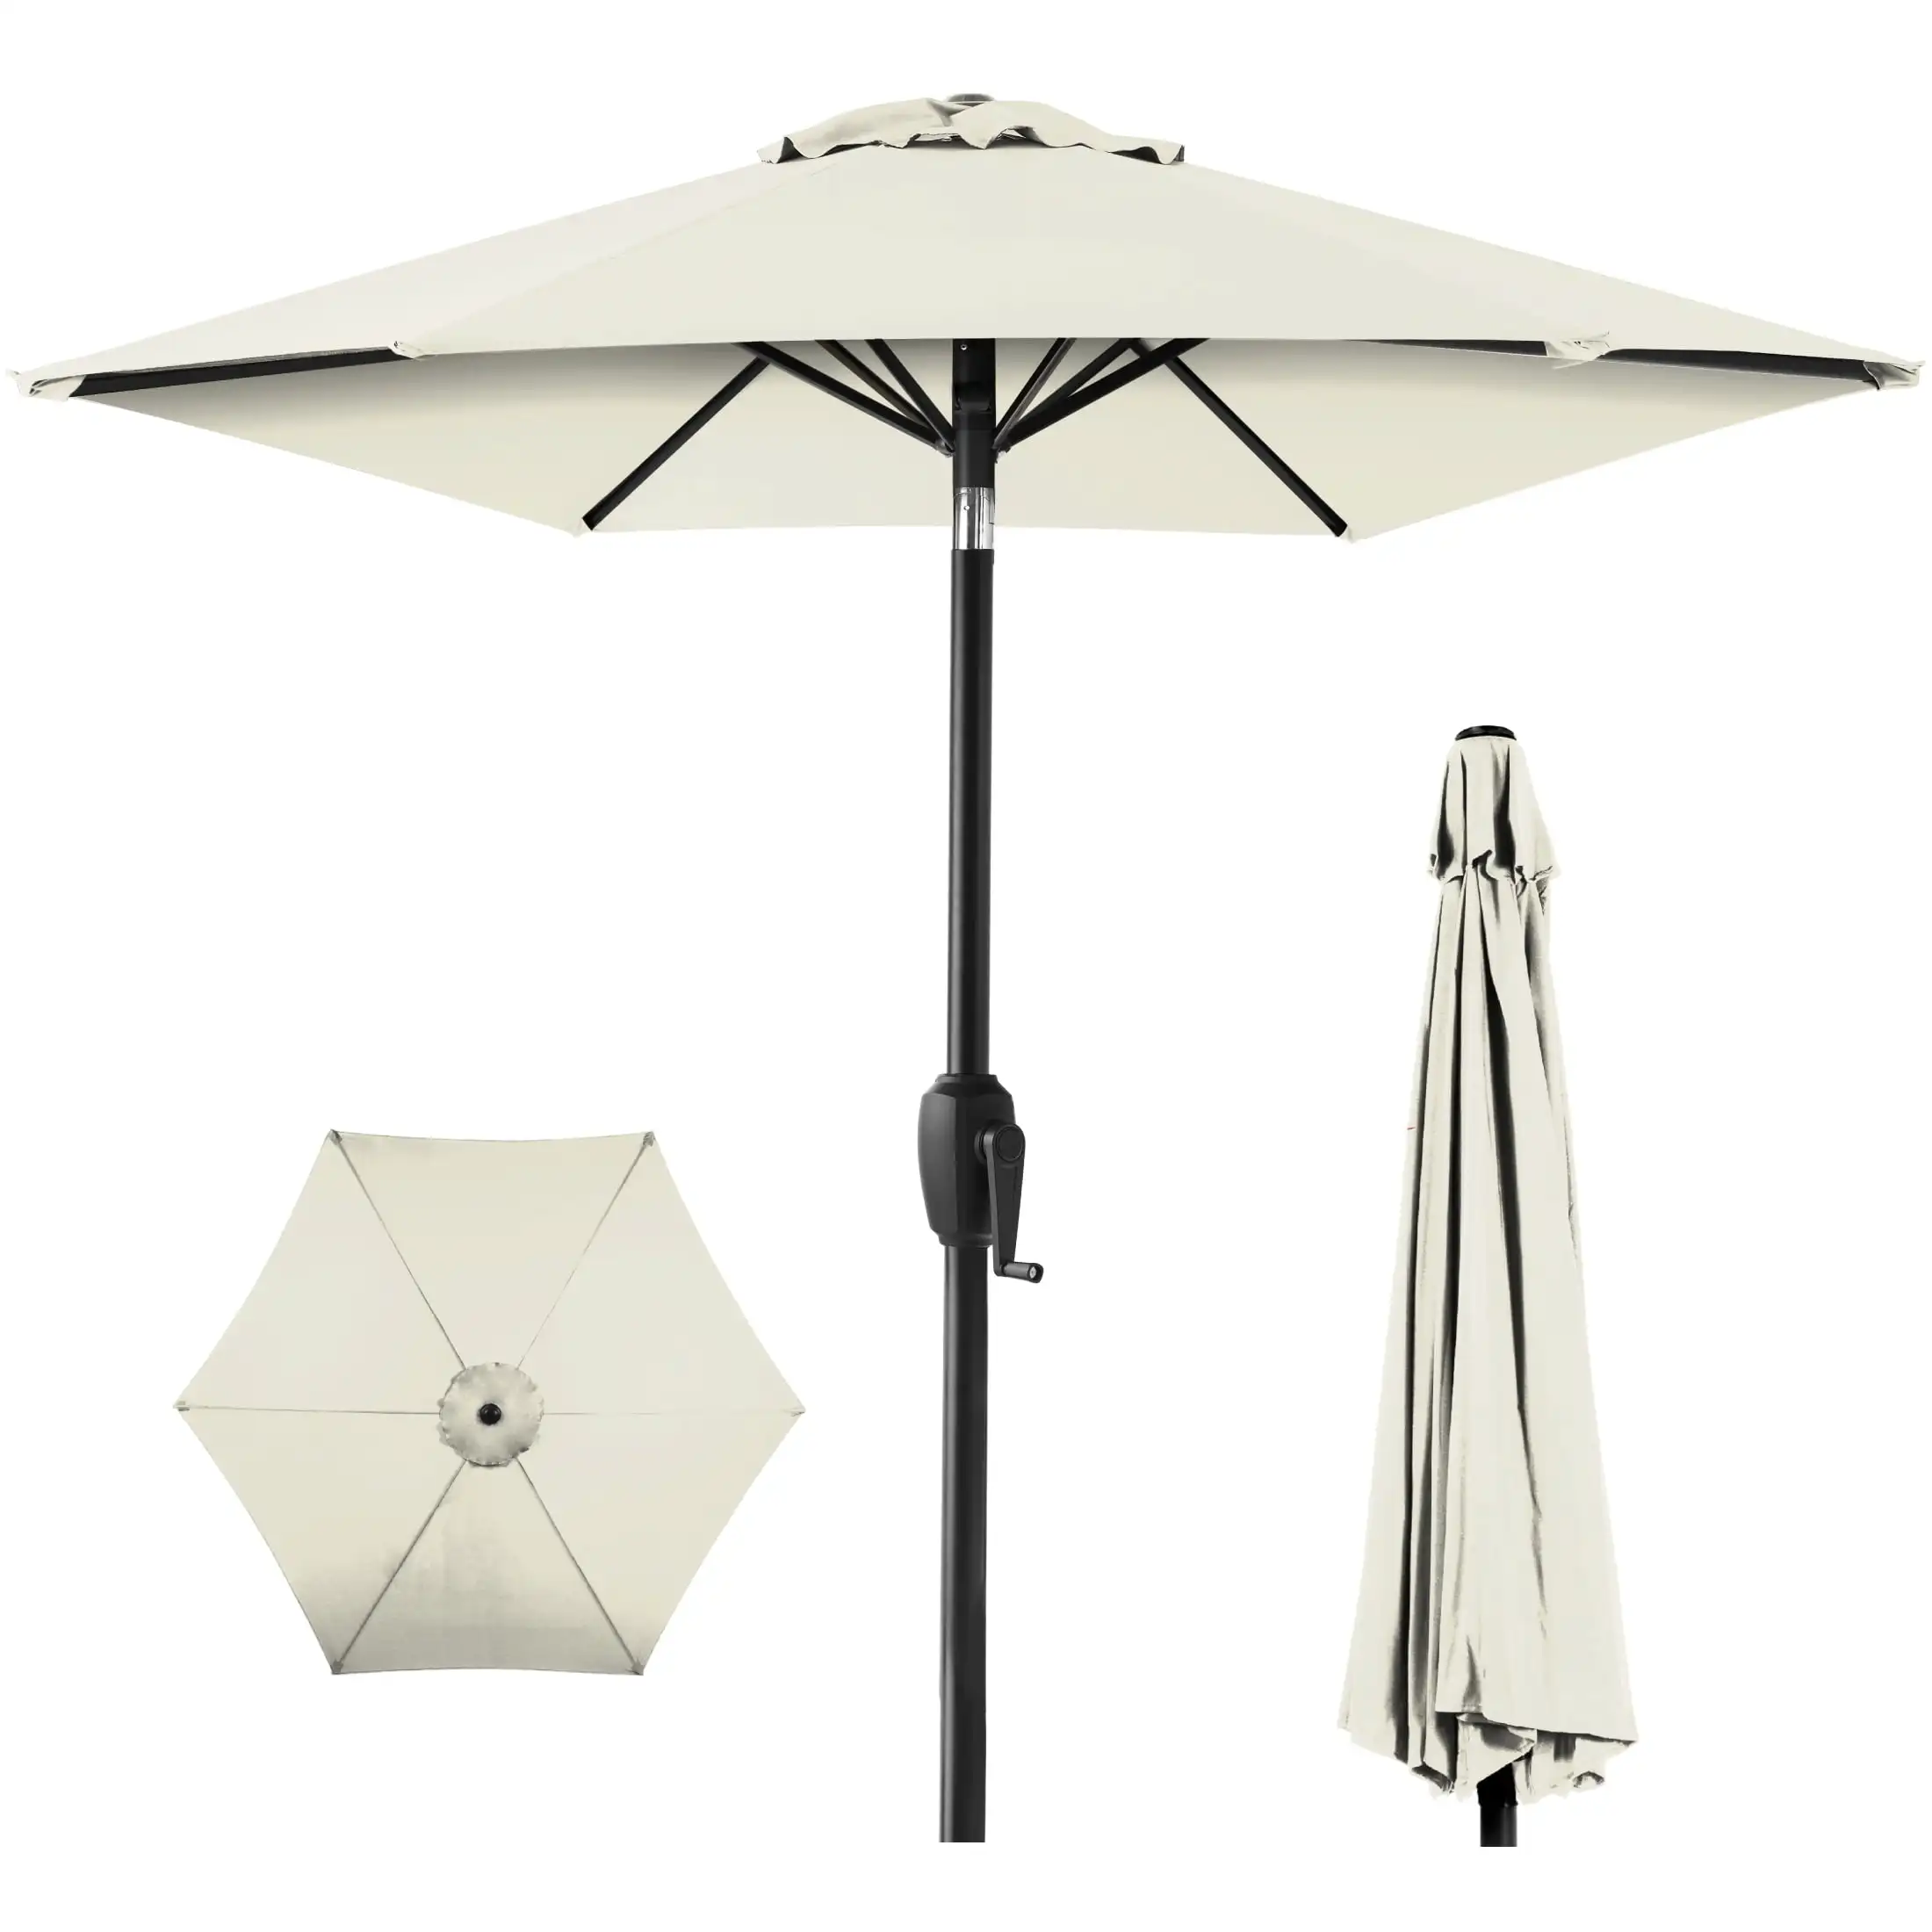 

Best Choice Products 7.5ft Heavy-Duty Outdoor Market Patio Umbrella w/ Push Button Tilt, Easy Crank Lift - Ivory patio umbrella